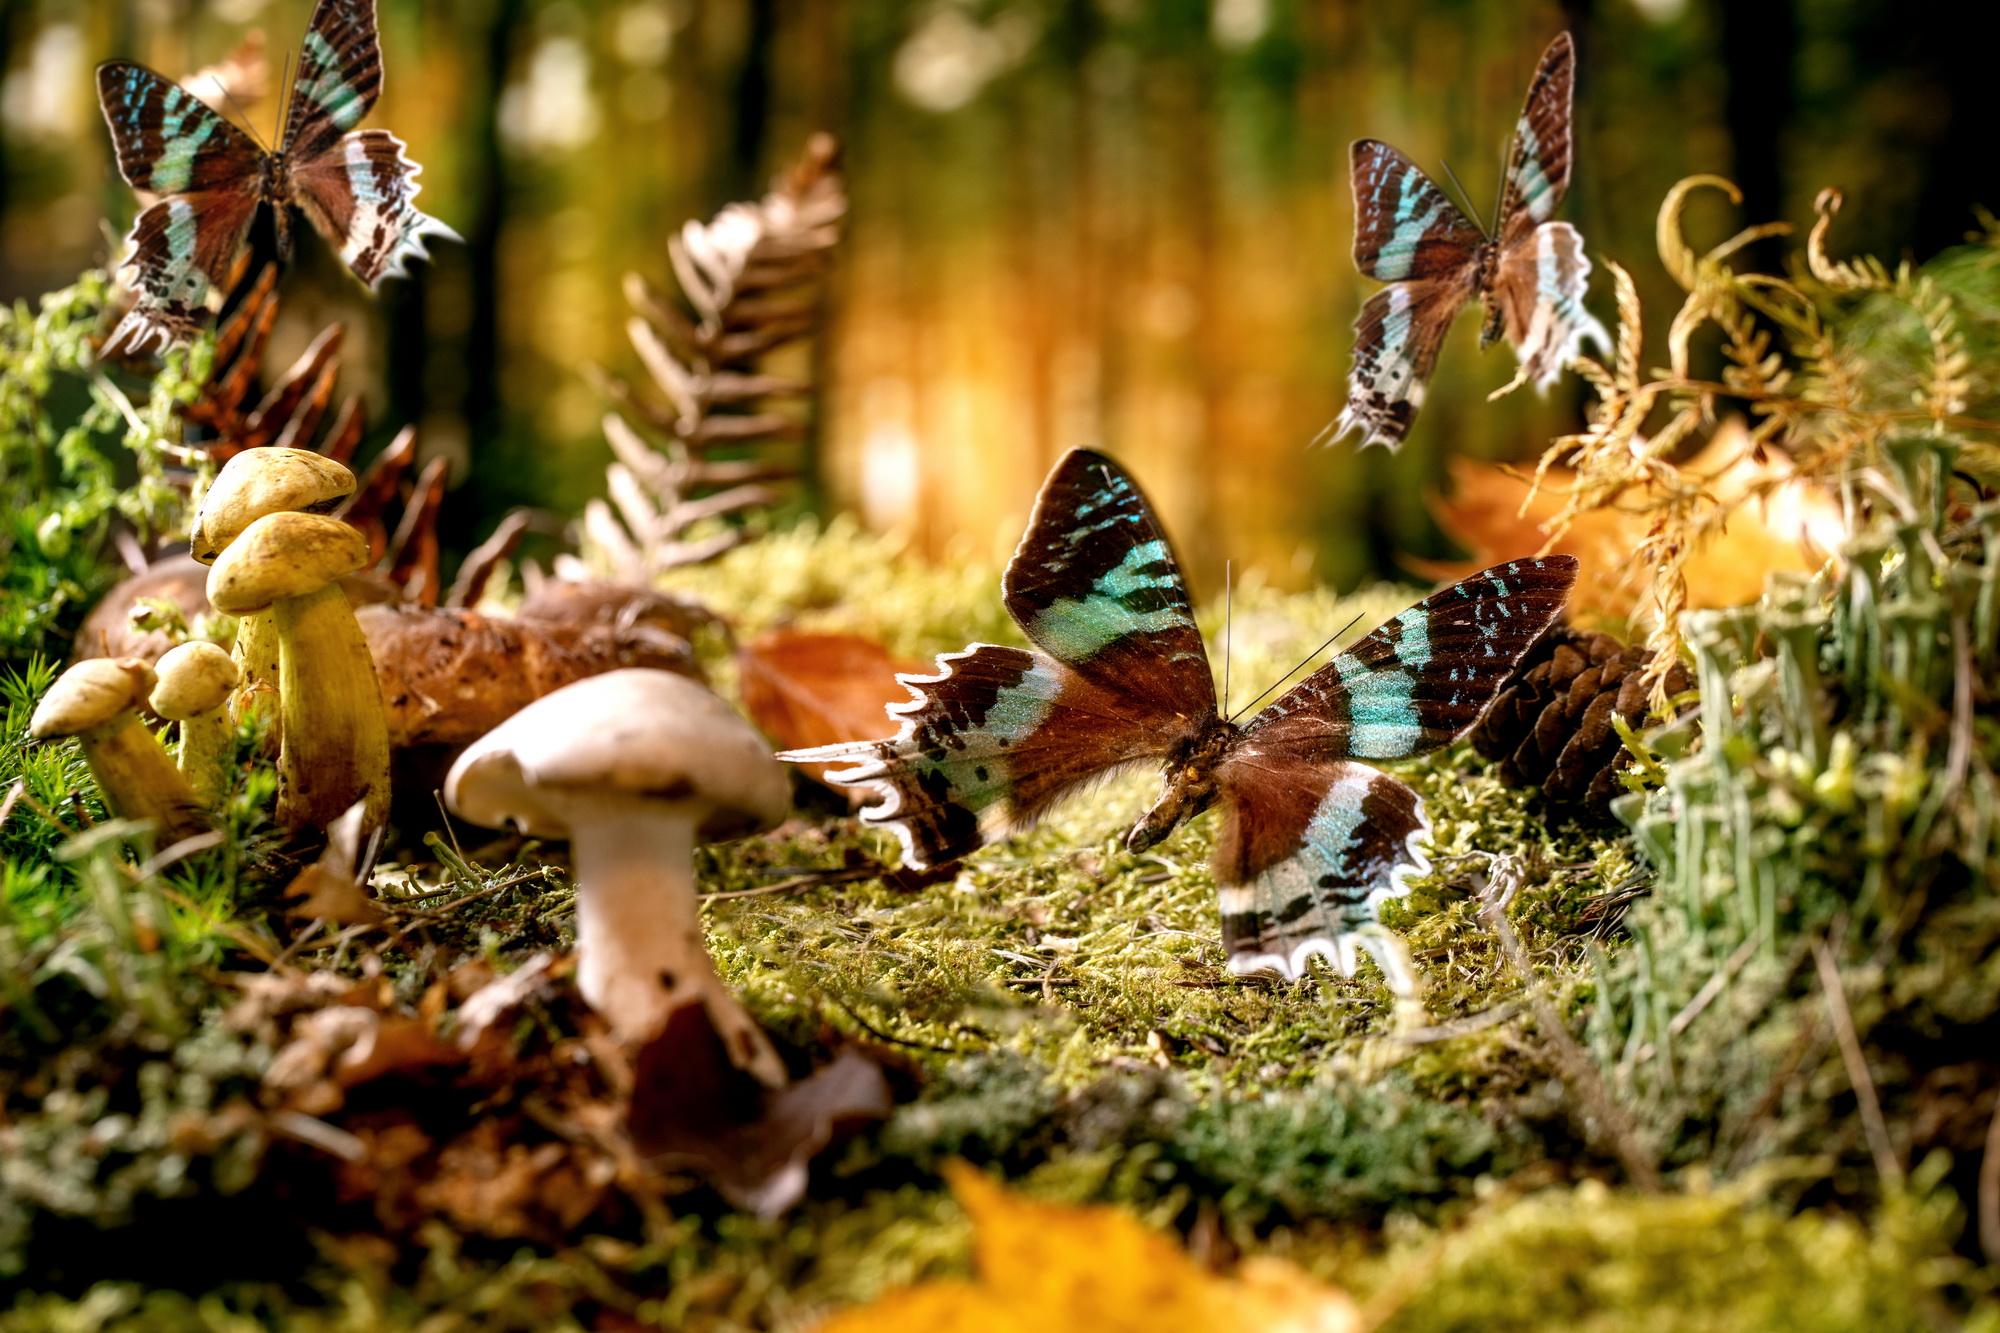 fairy-tale-ambiance-magical-autumn-forest-backgrou-2021-11-04-23-59-58-utc